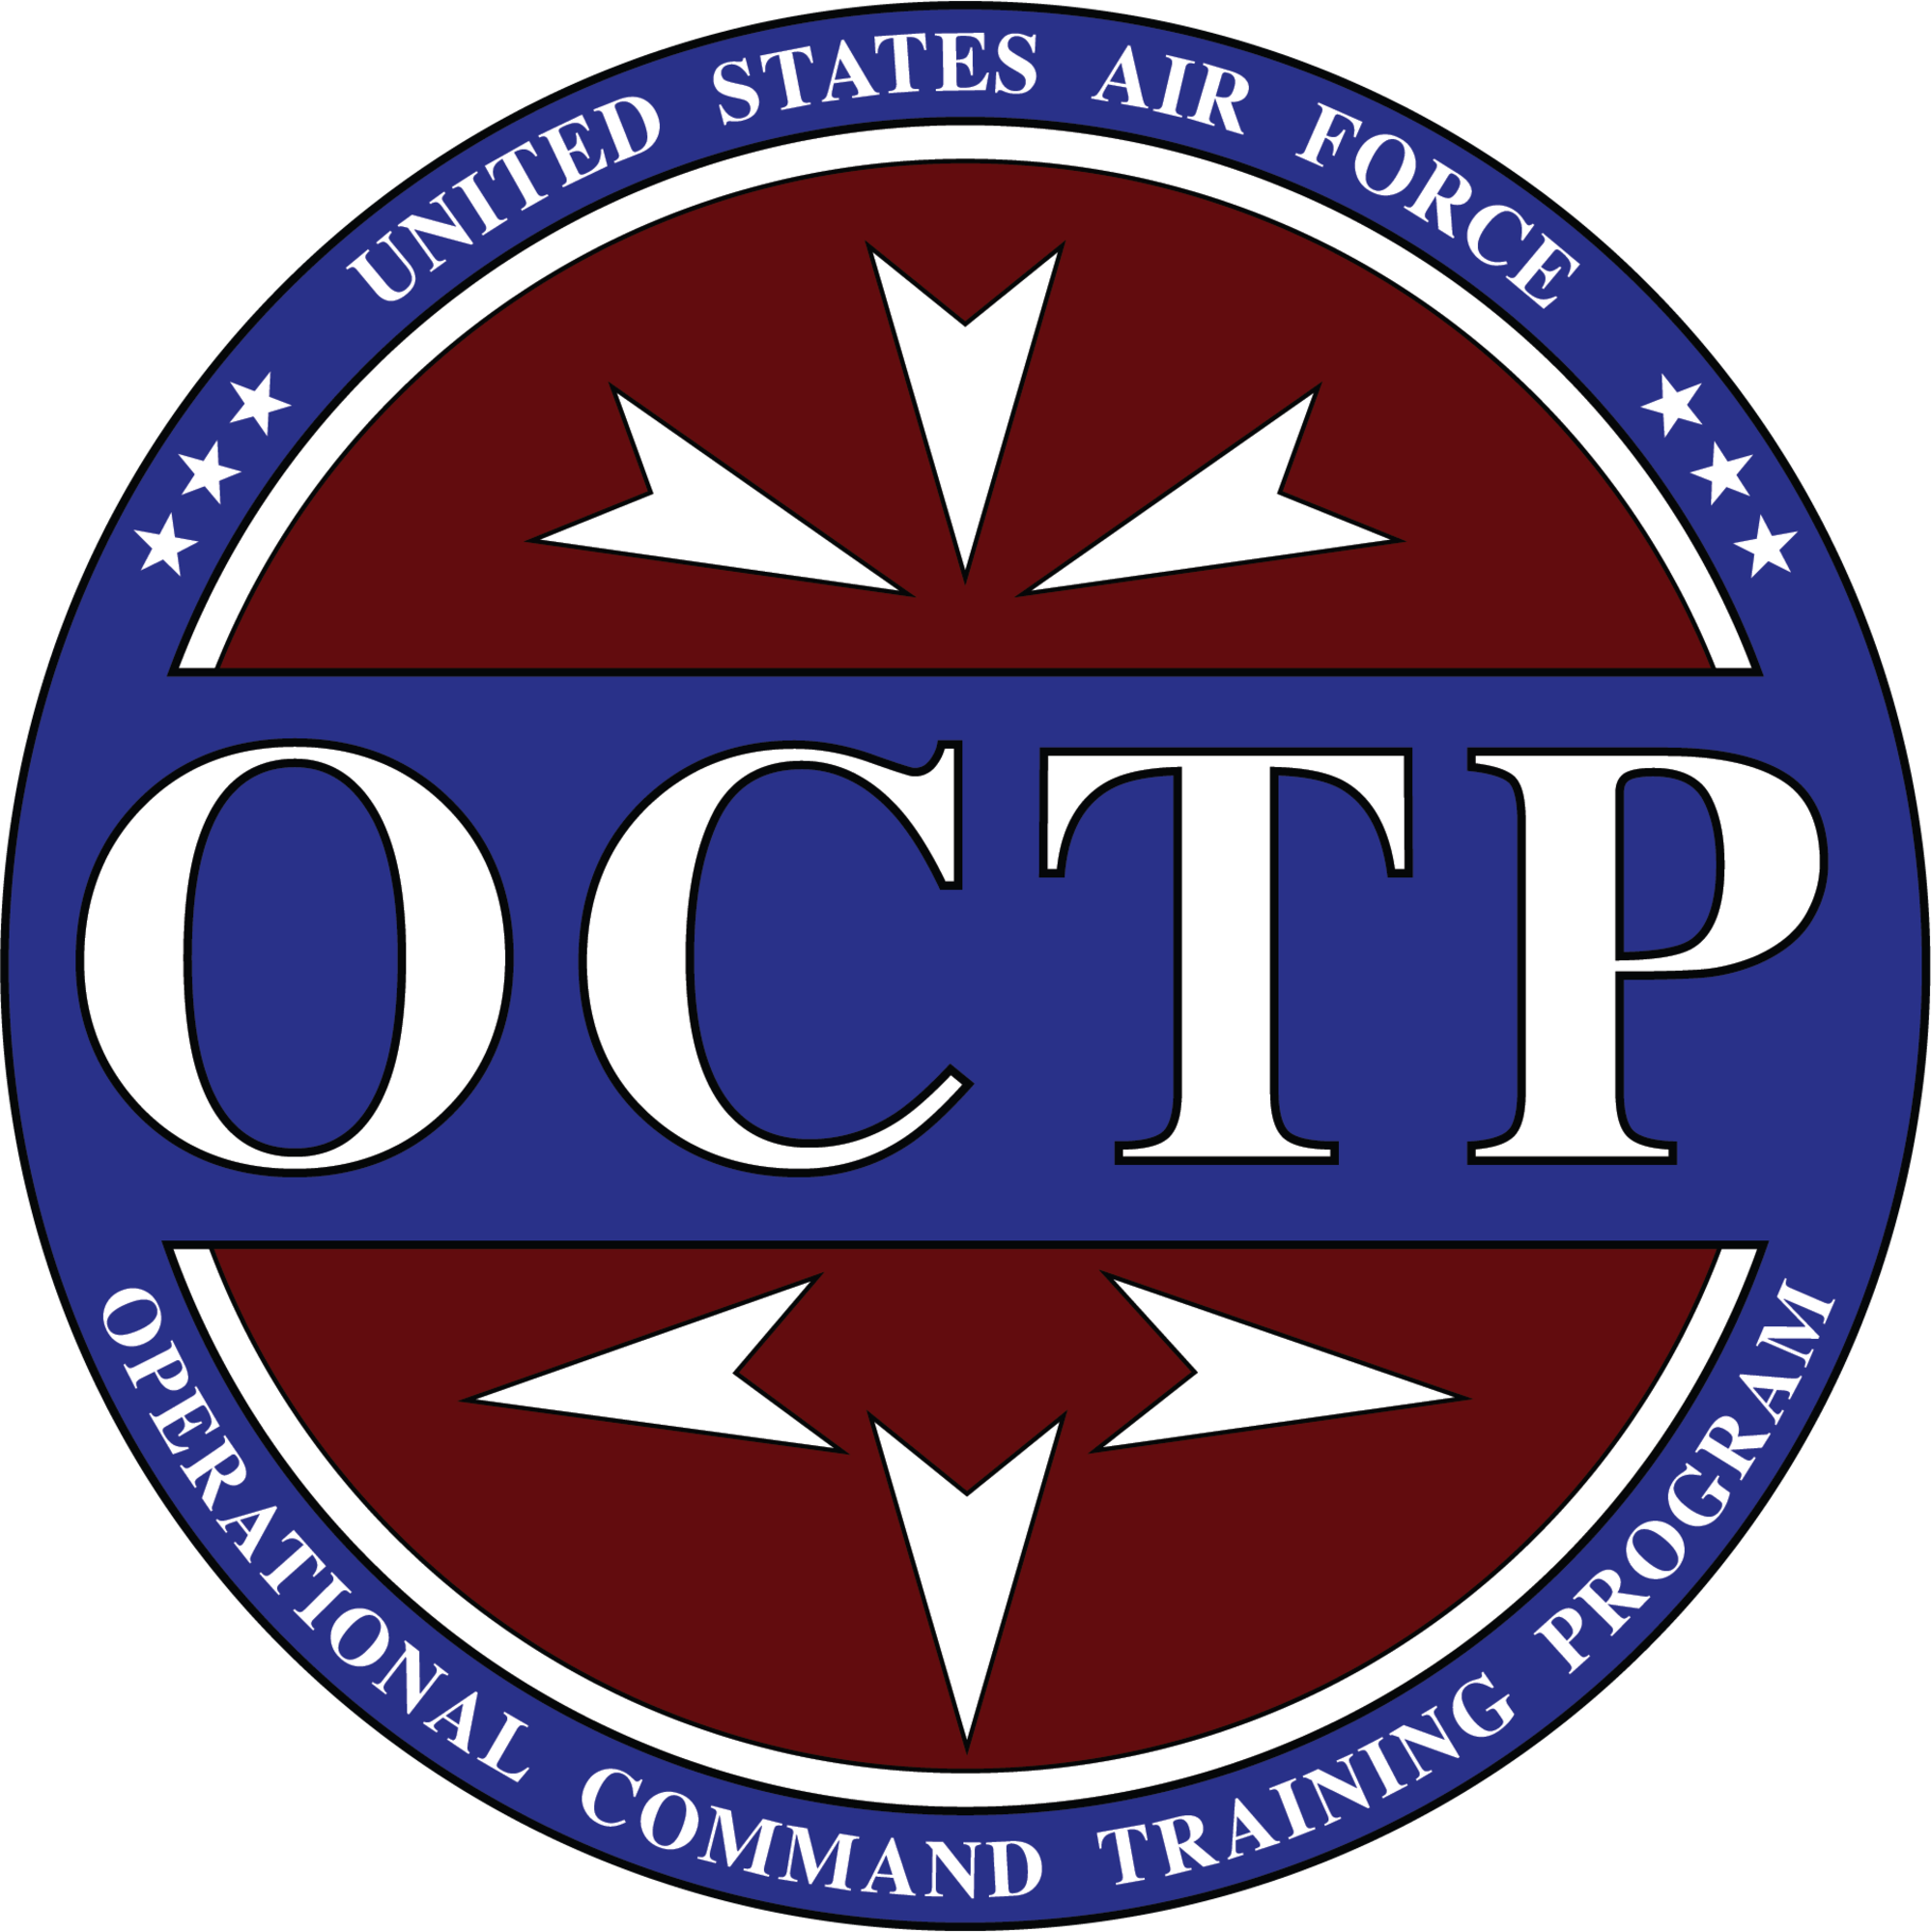 graphic: emblem of Operational Command Training Program